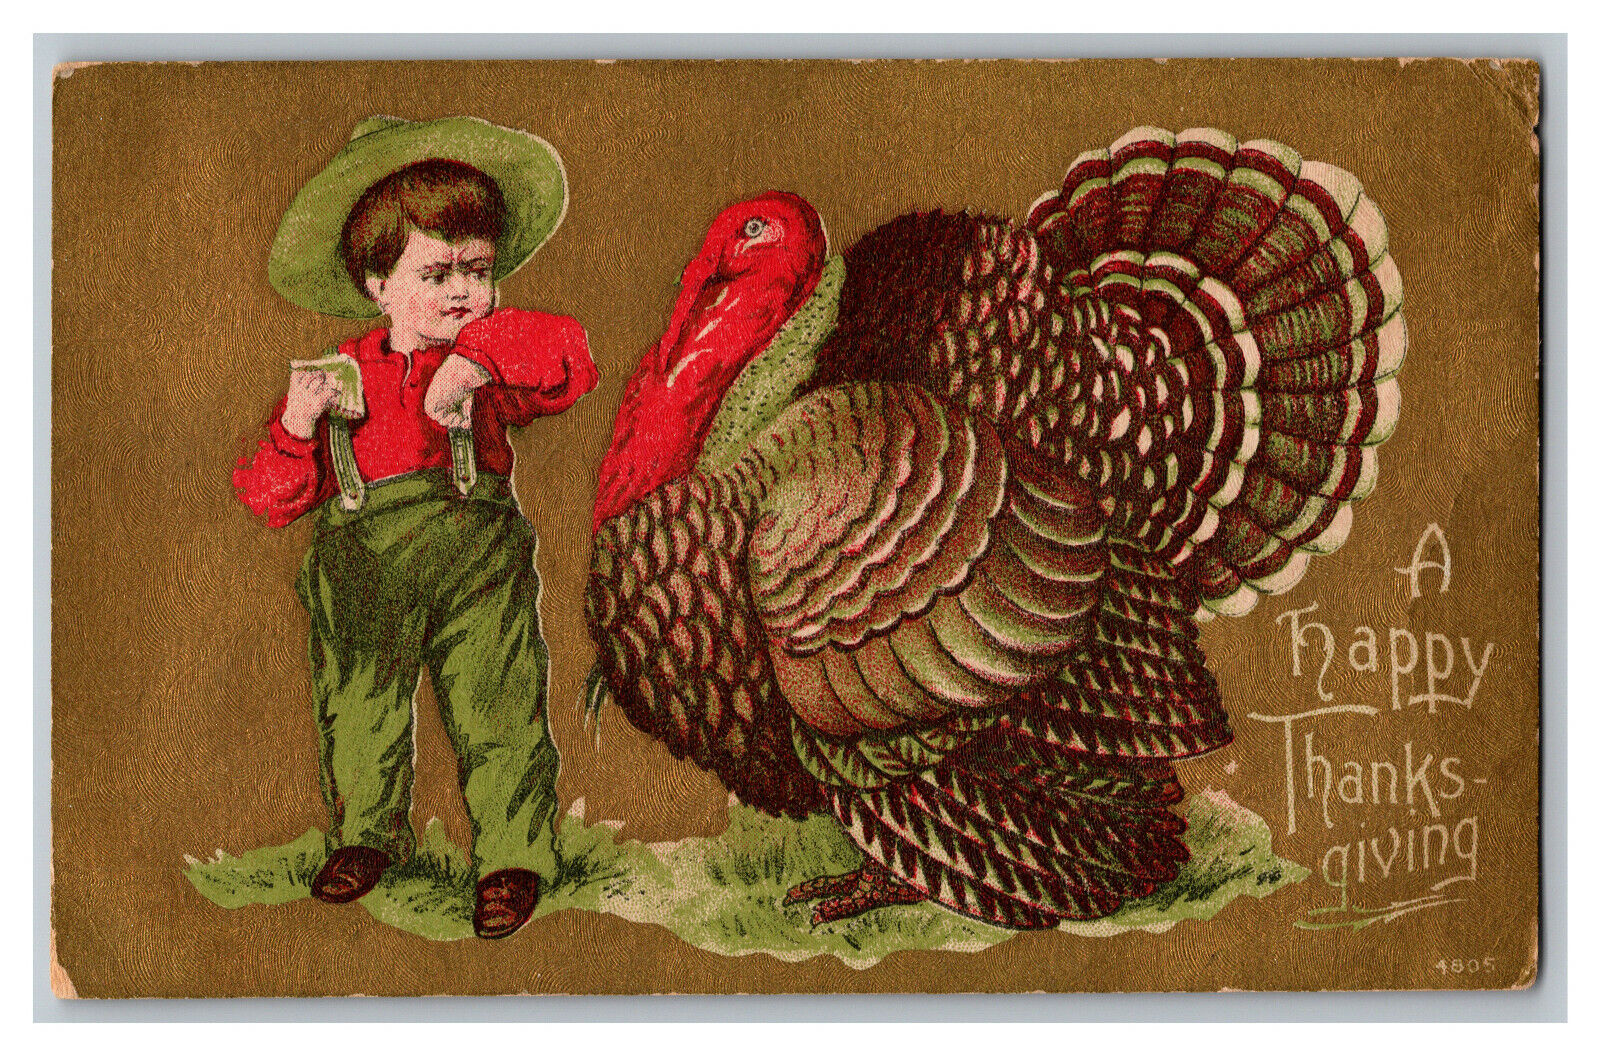 Postcard A Happy Thanksgiving Turkey Boy Standard View Card